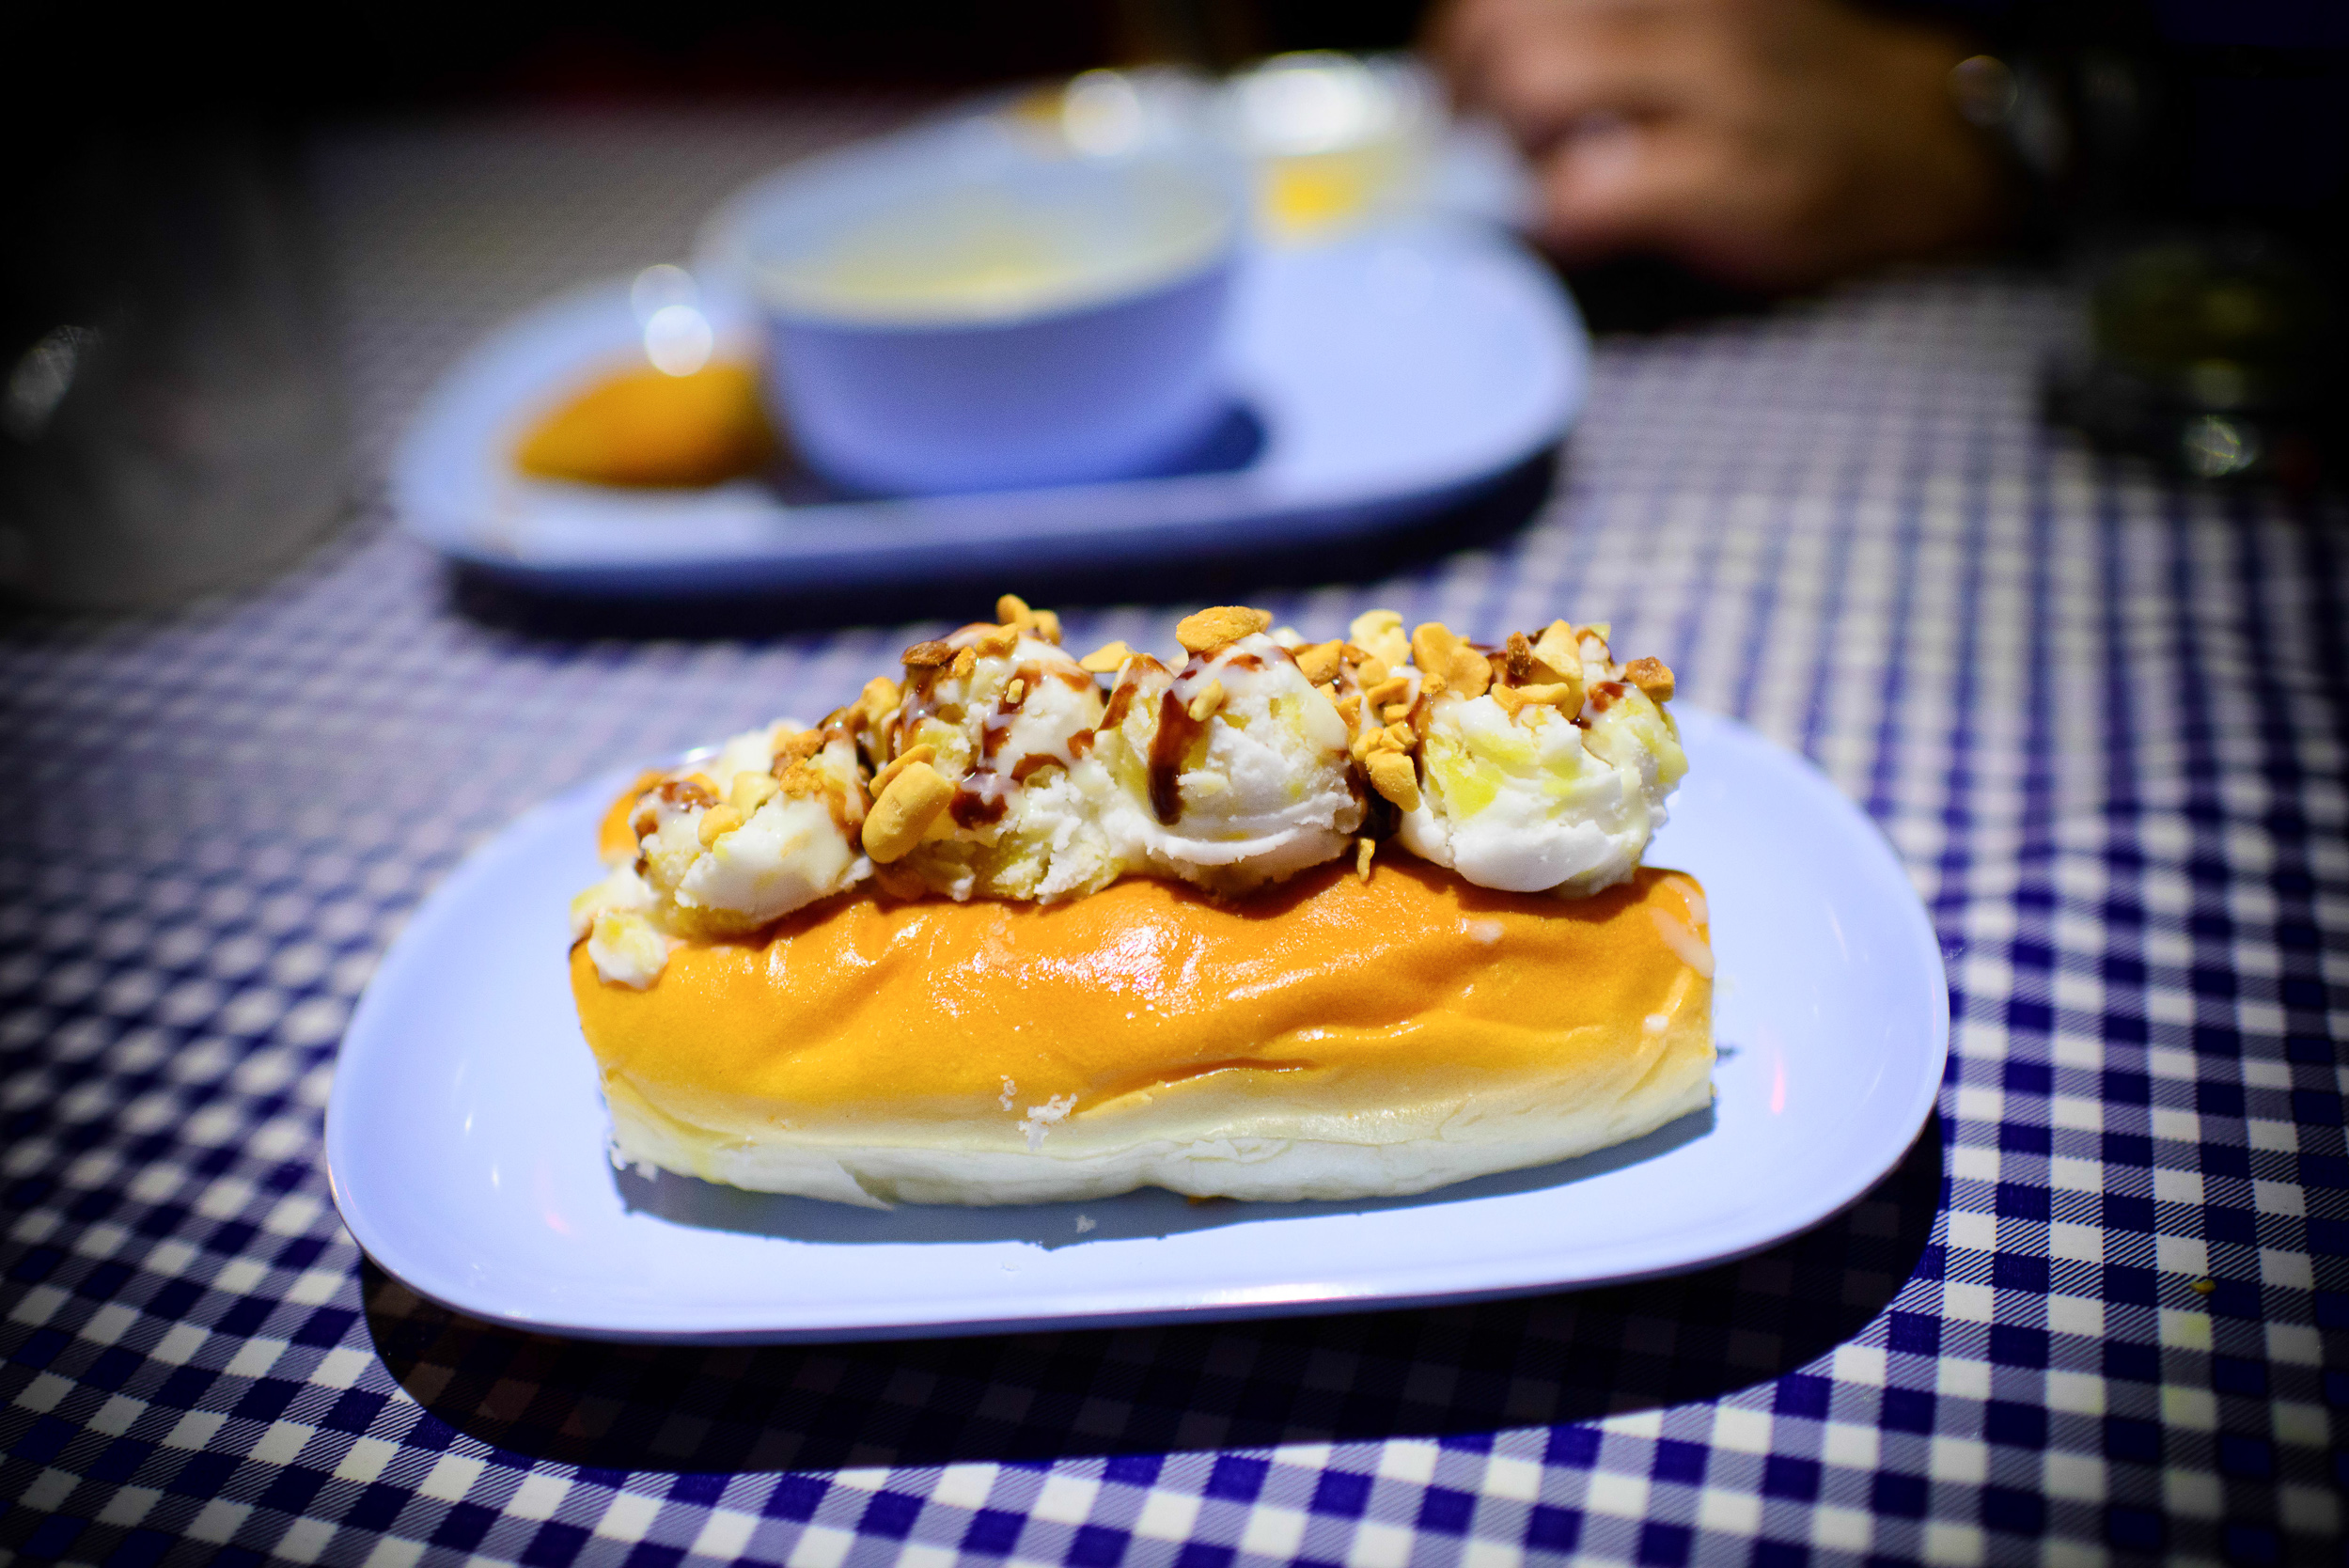 Coconut ice cream sandwich - sweet hot dog bun, sticky rice